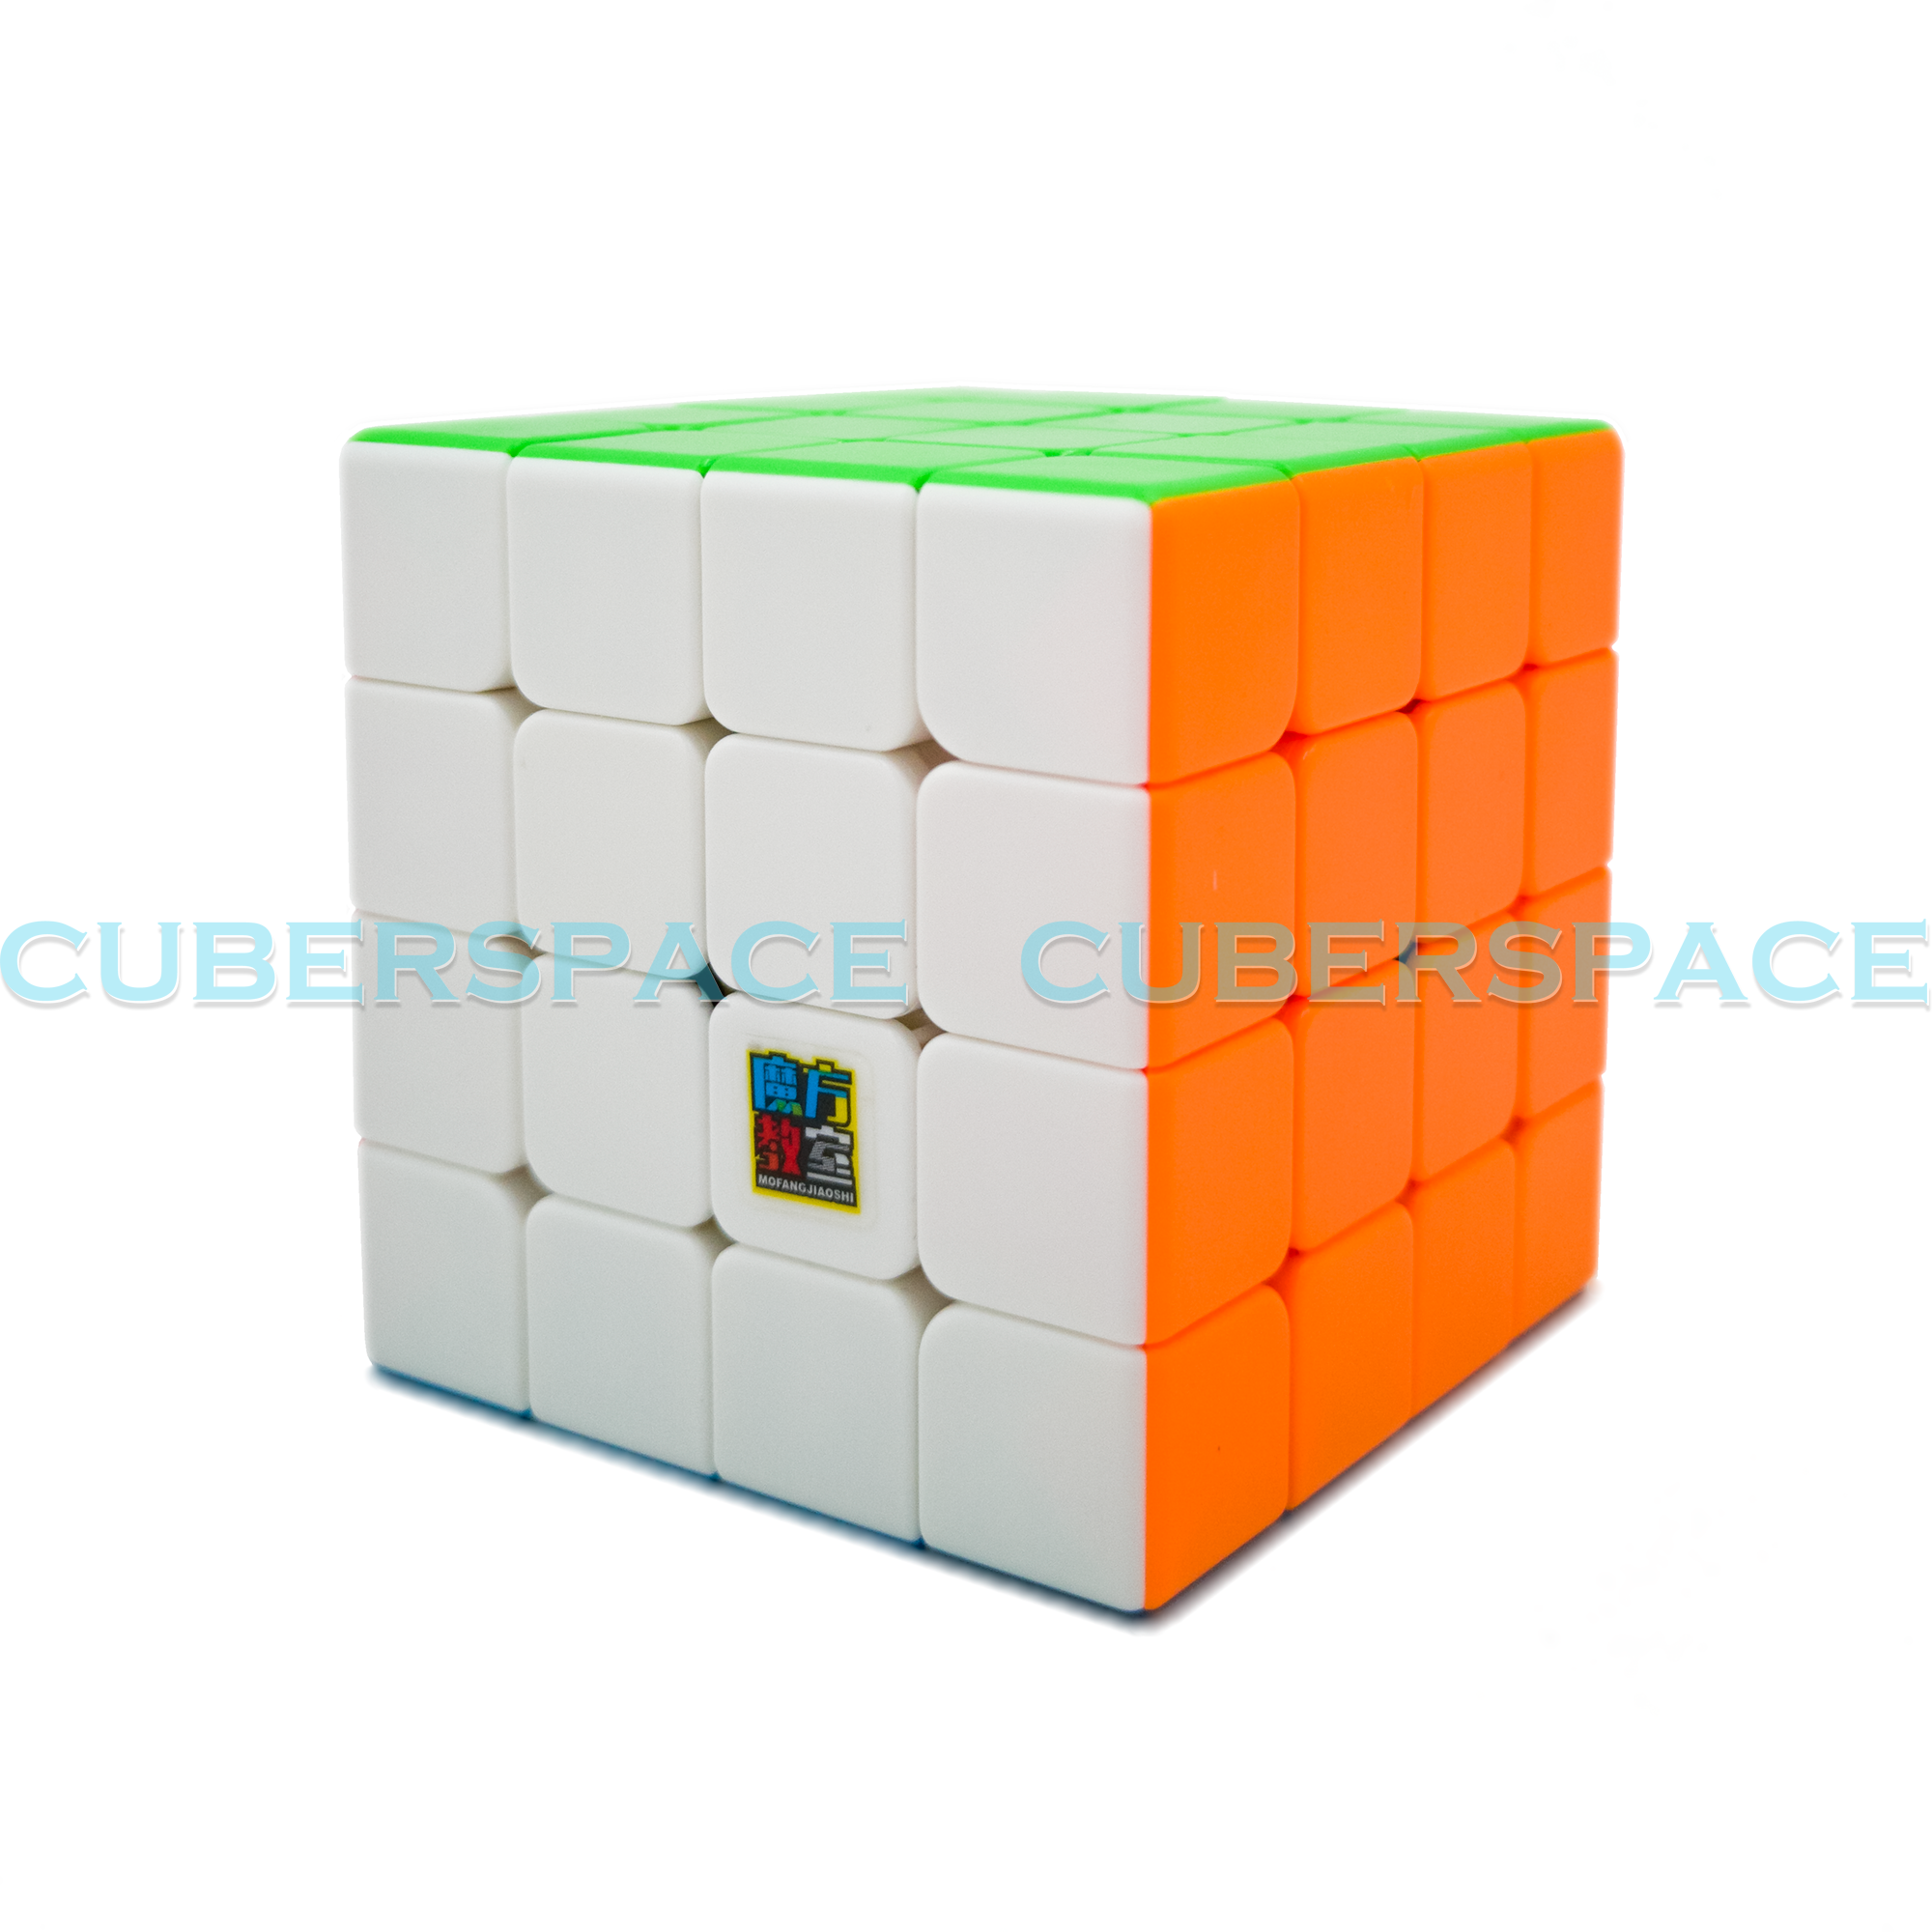 MFJS MeiLong 4x4 M - CuberSpace - Speedcube - Singapore